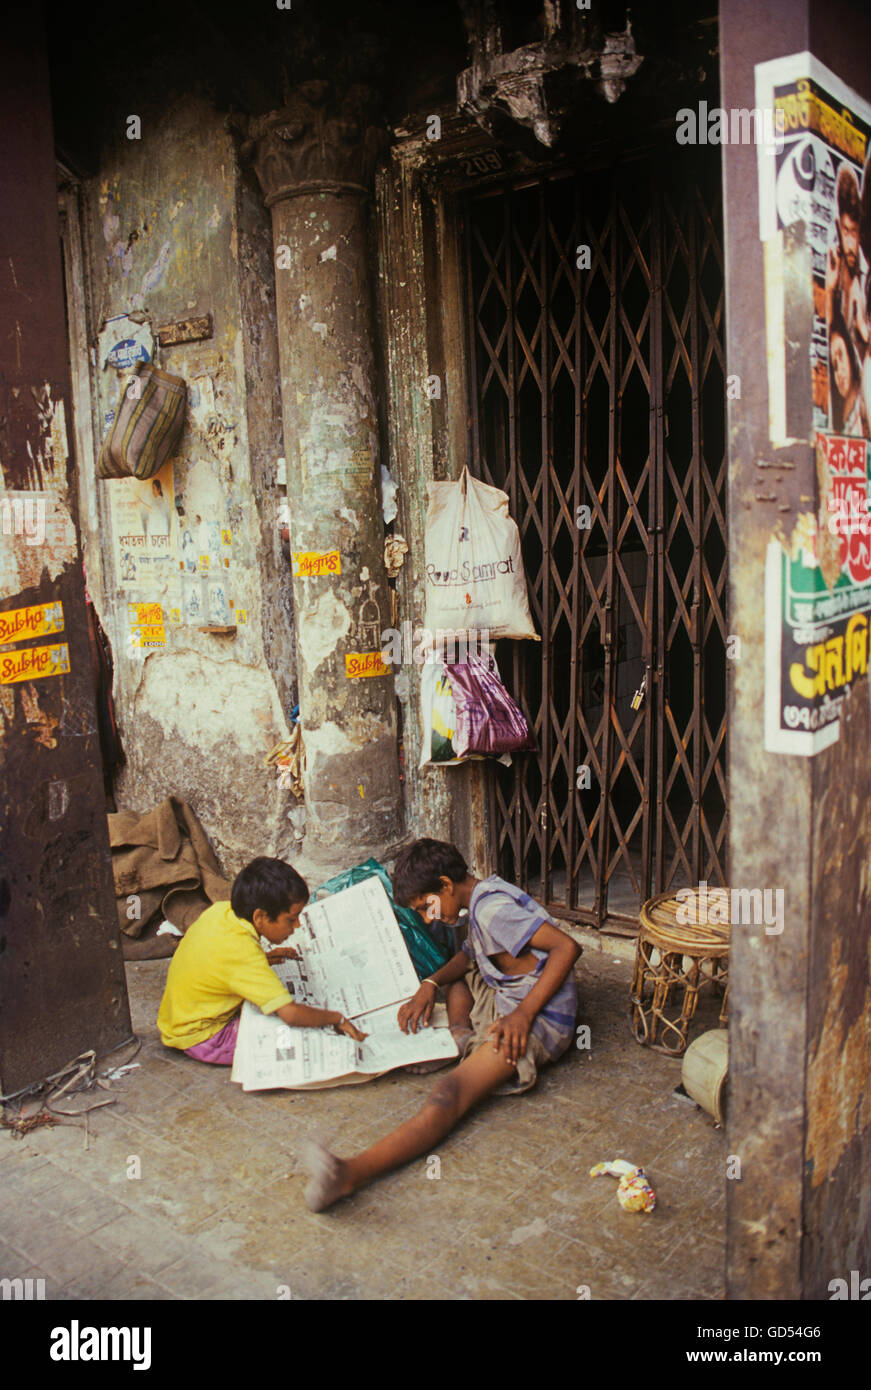 Children reading newspaper on the street Stock Photo